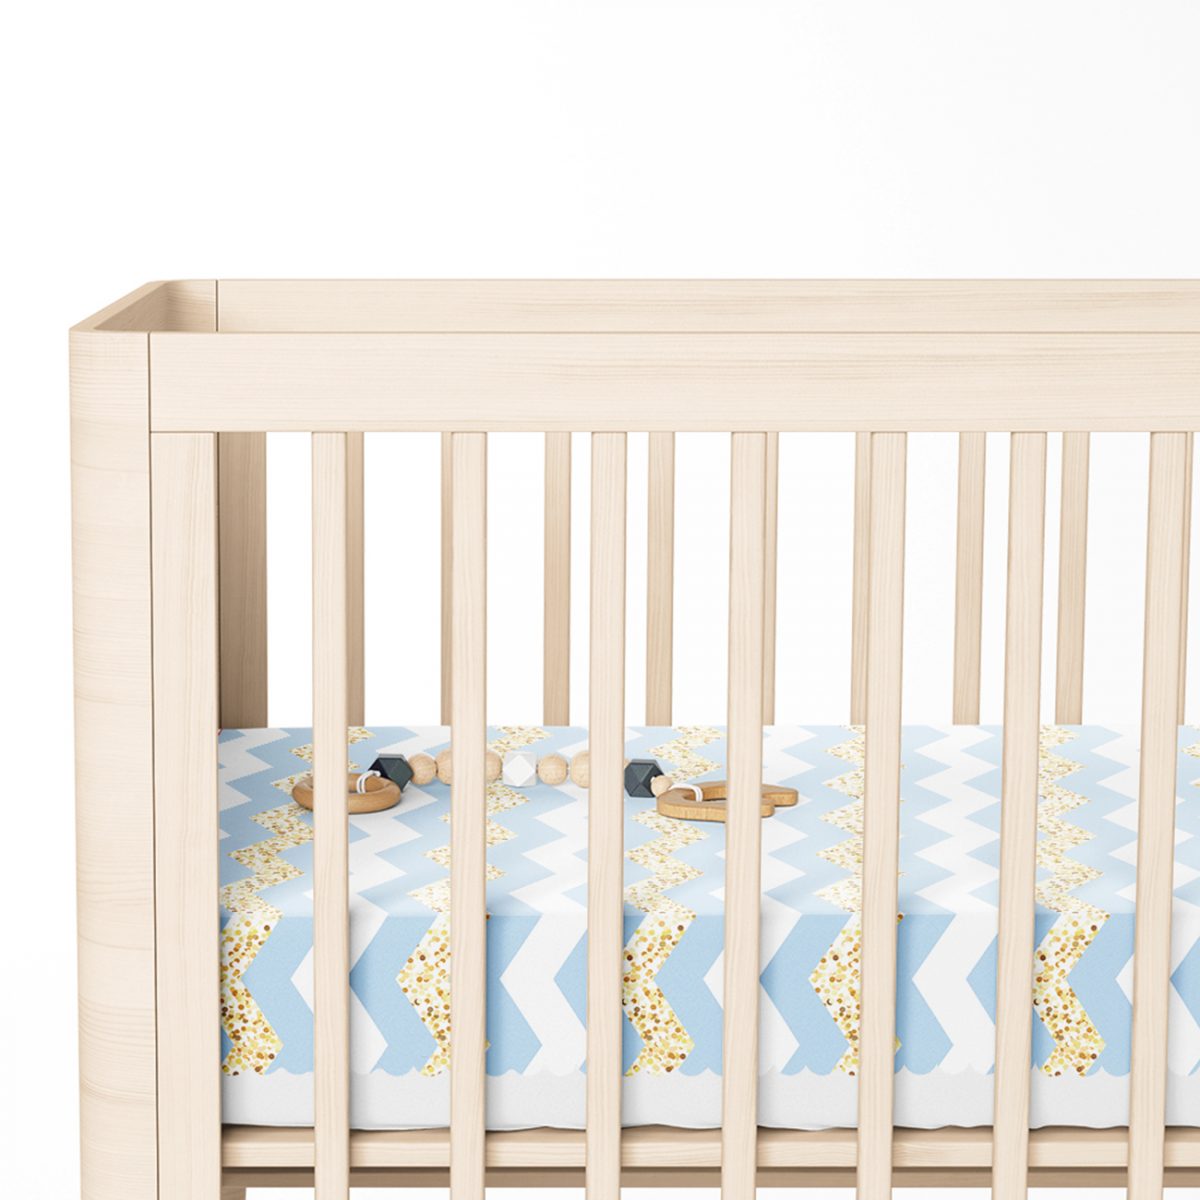 Mavi Altın Varaklı Çizgi Motifli Çocuk Odası Yatak Örtüsü Realhomes